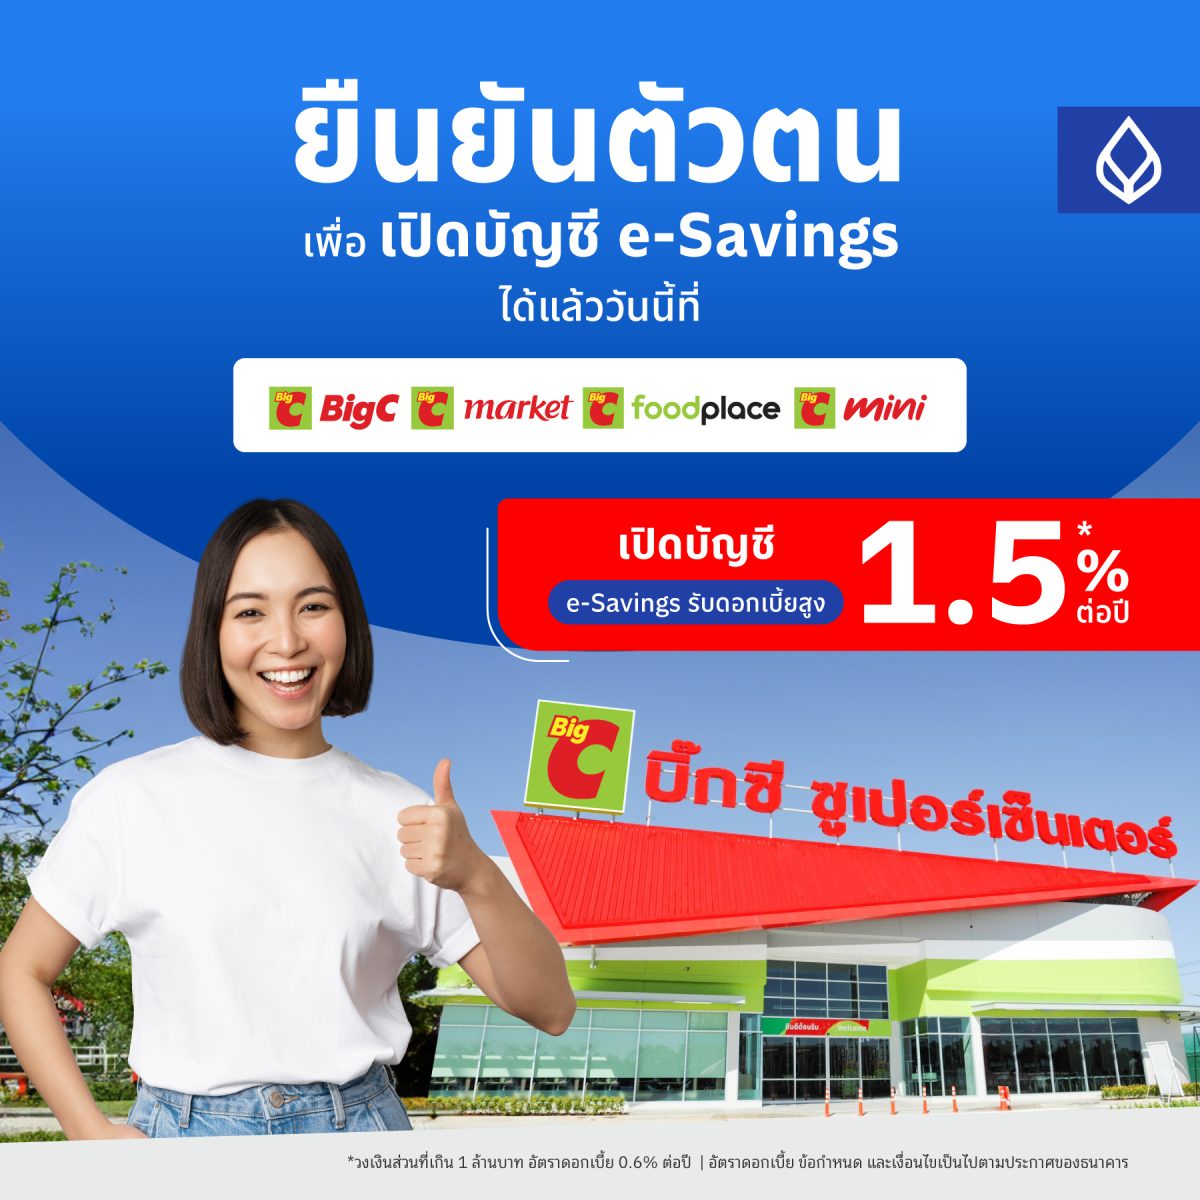 Bangkok Bank expands its Be My ID service at Big C, enabling customers to open savings accounts any time at more than 1,600 Big C branches